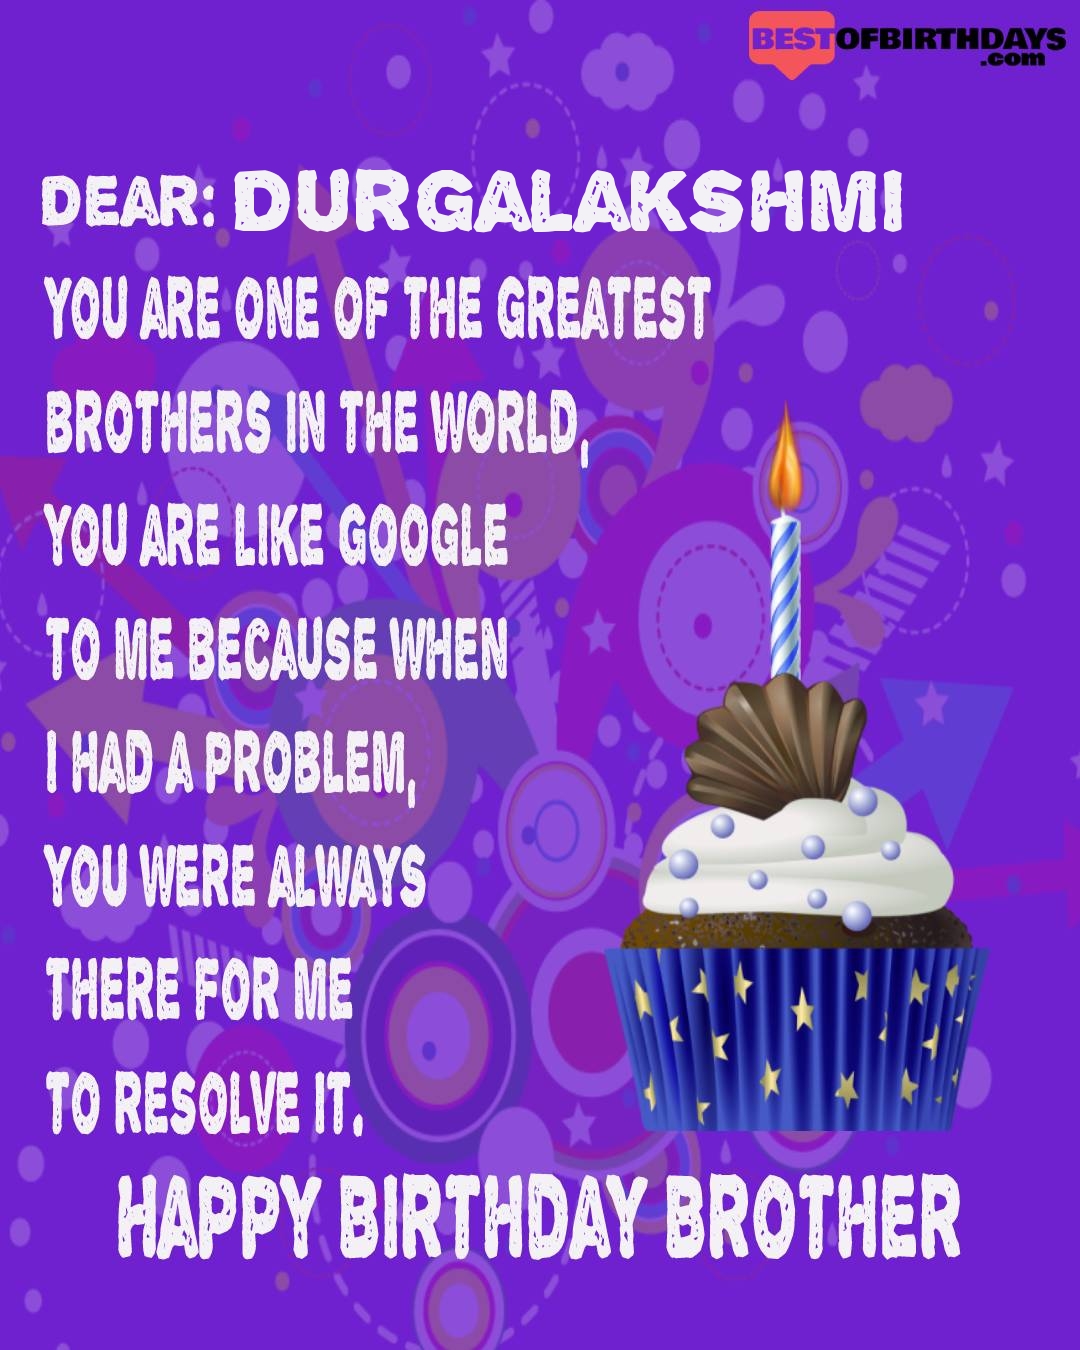 Happy birthday durgalakshmi bhai brother bro